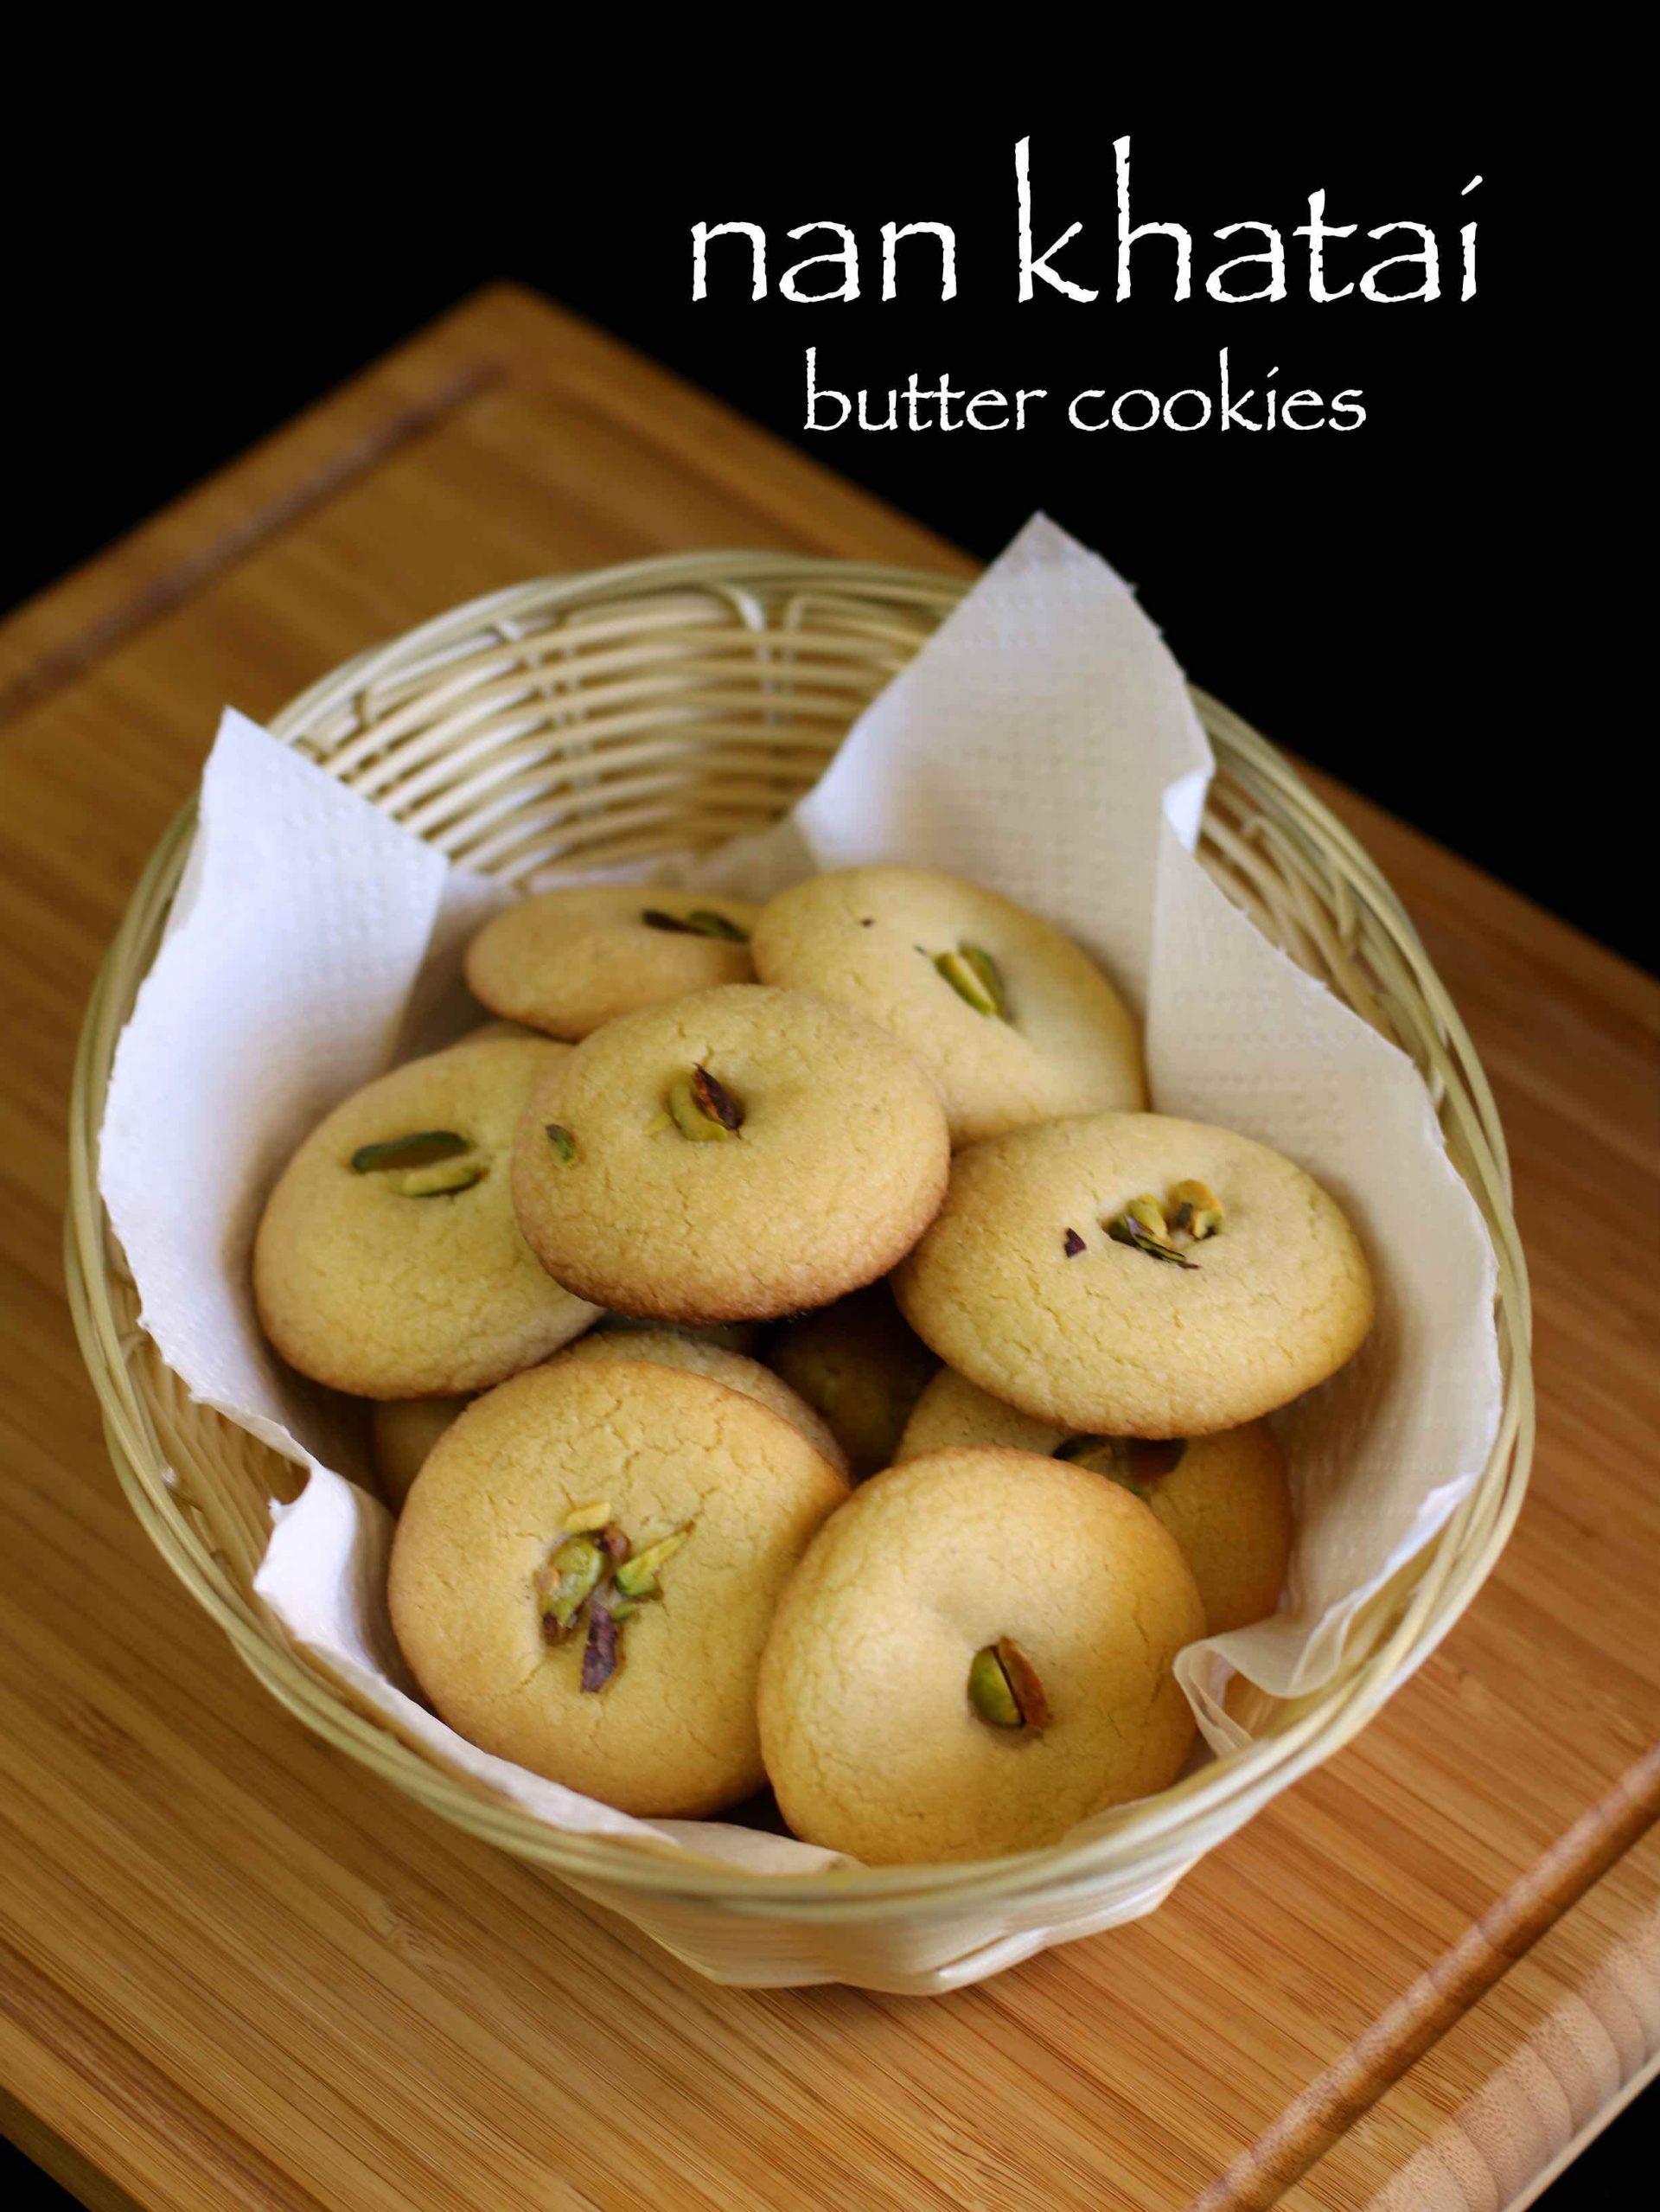 nankhatai recipe | nan khatai biscuits recipe | indian cookies recipe